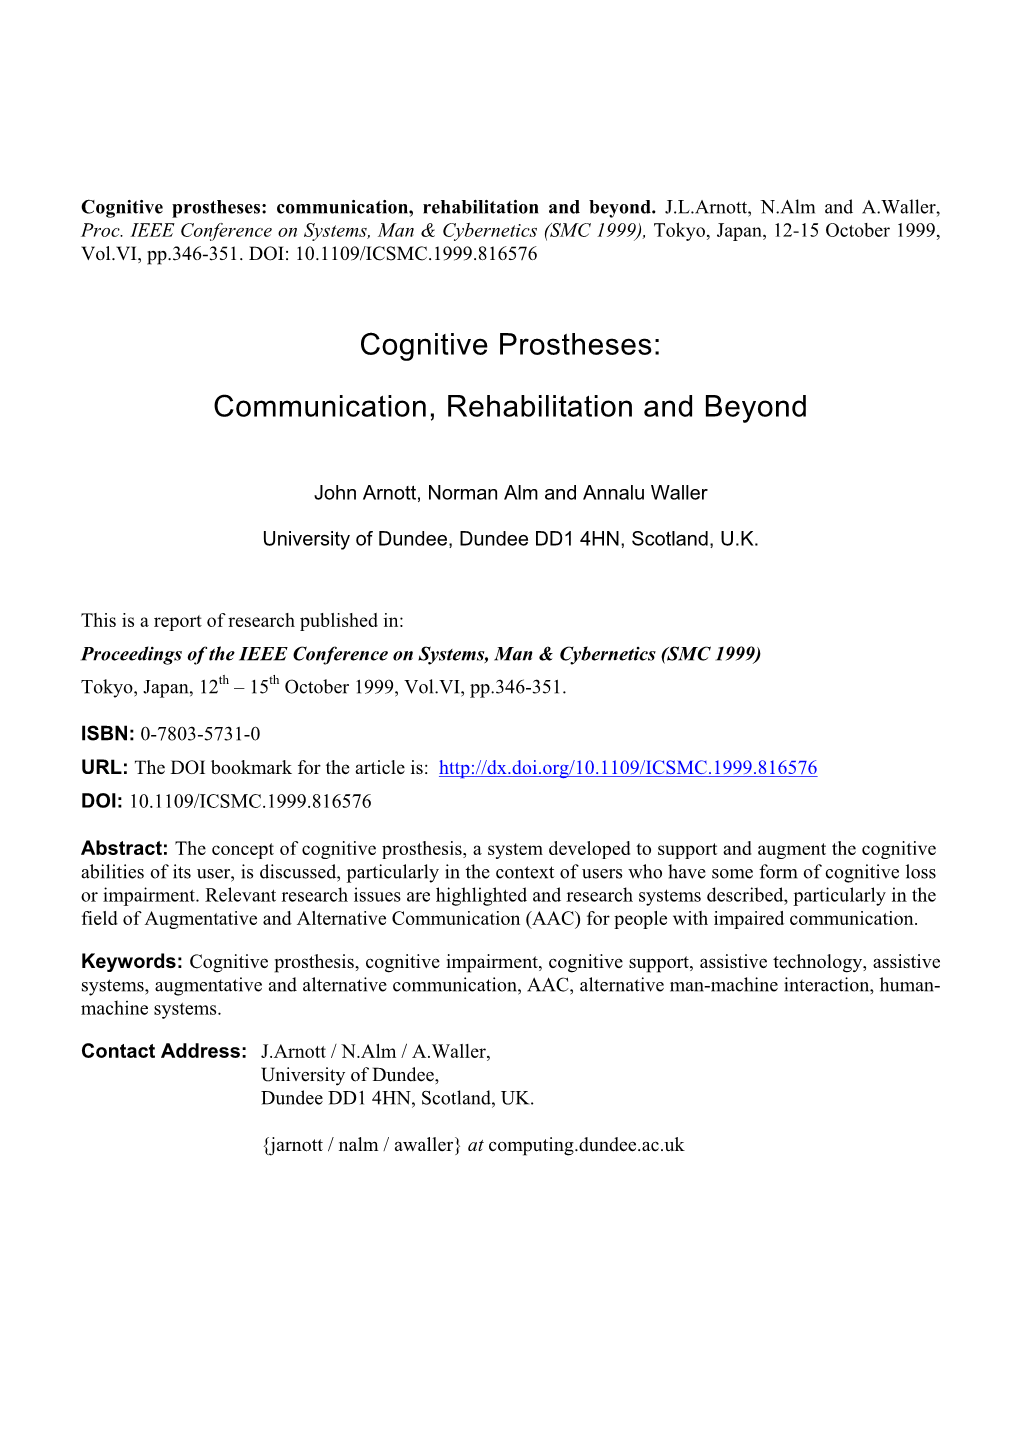 Cognitive Prostheses: Communication, Rehabilitation and Beyond